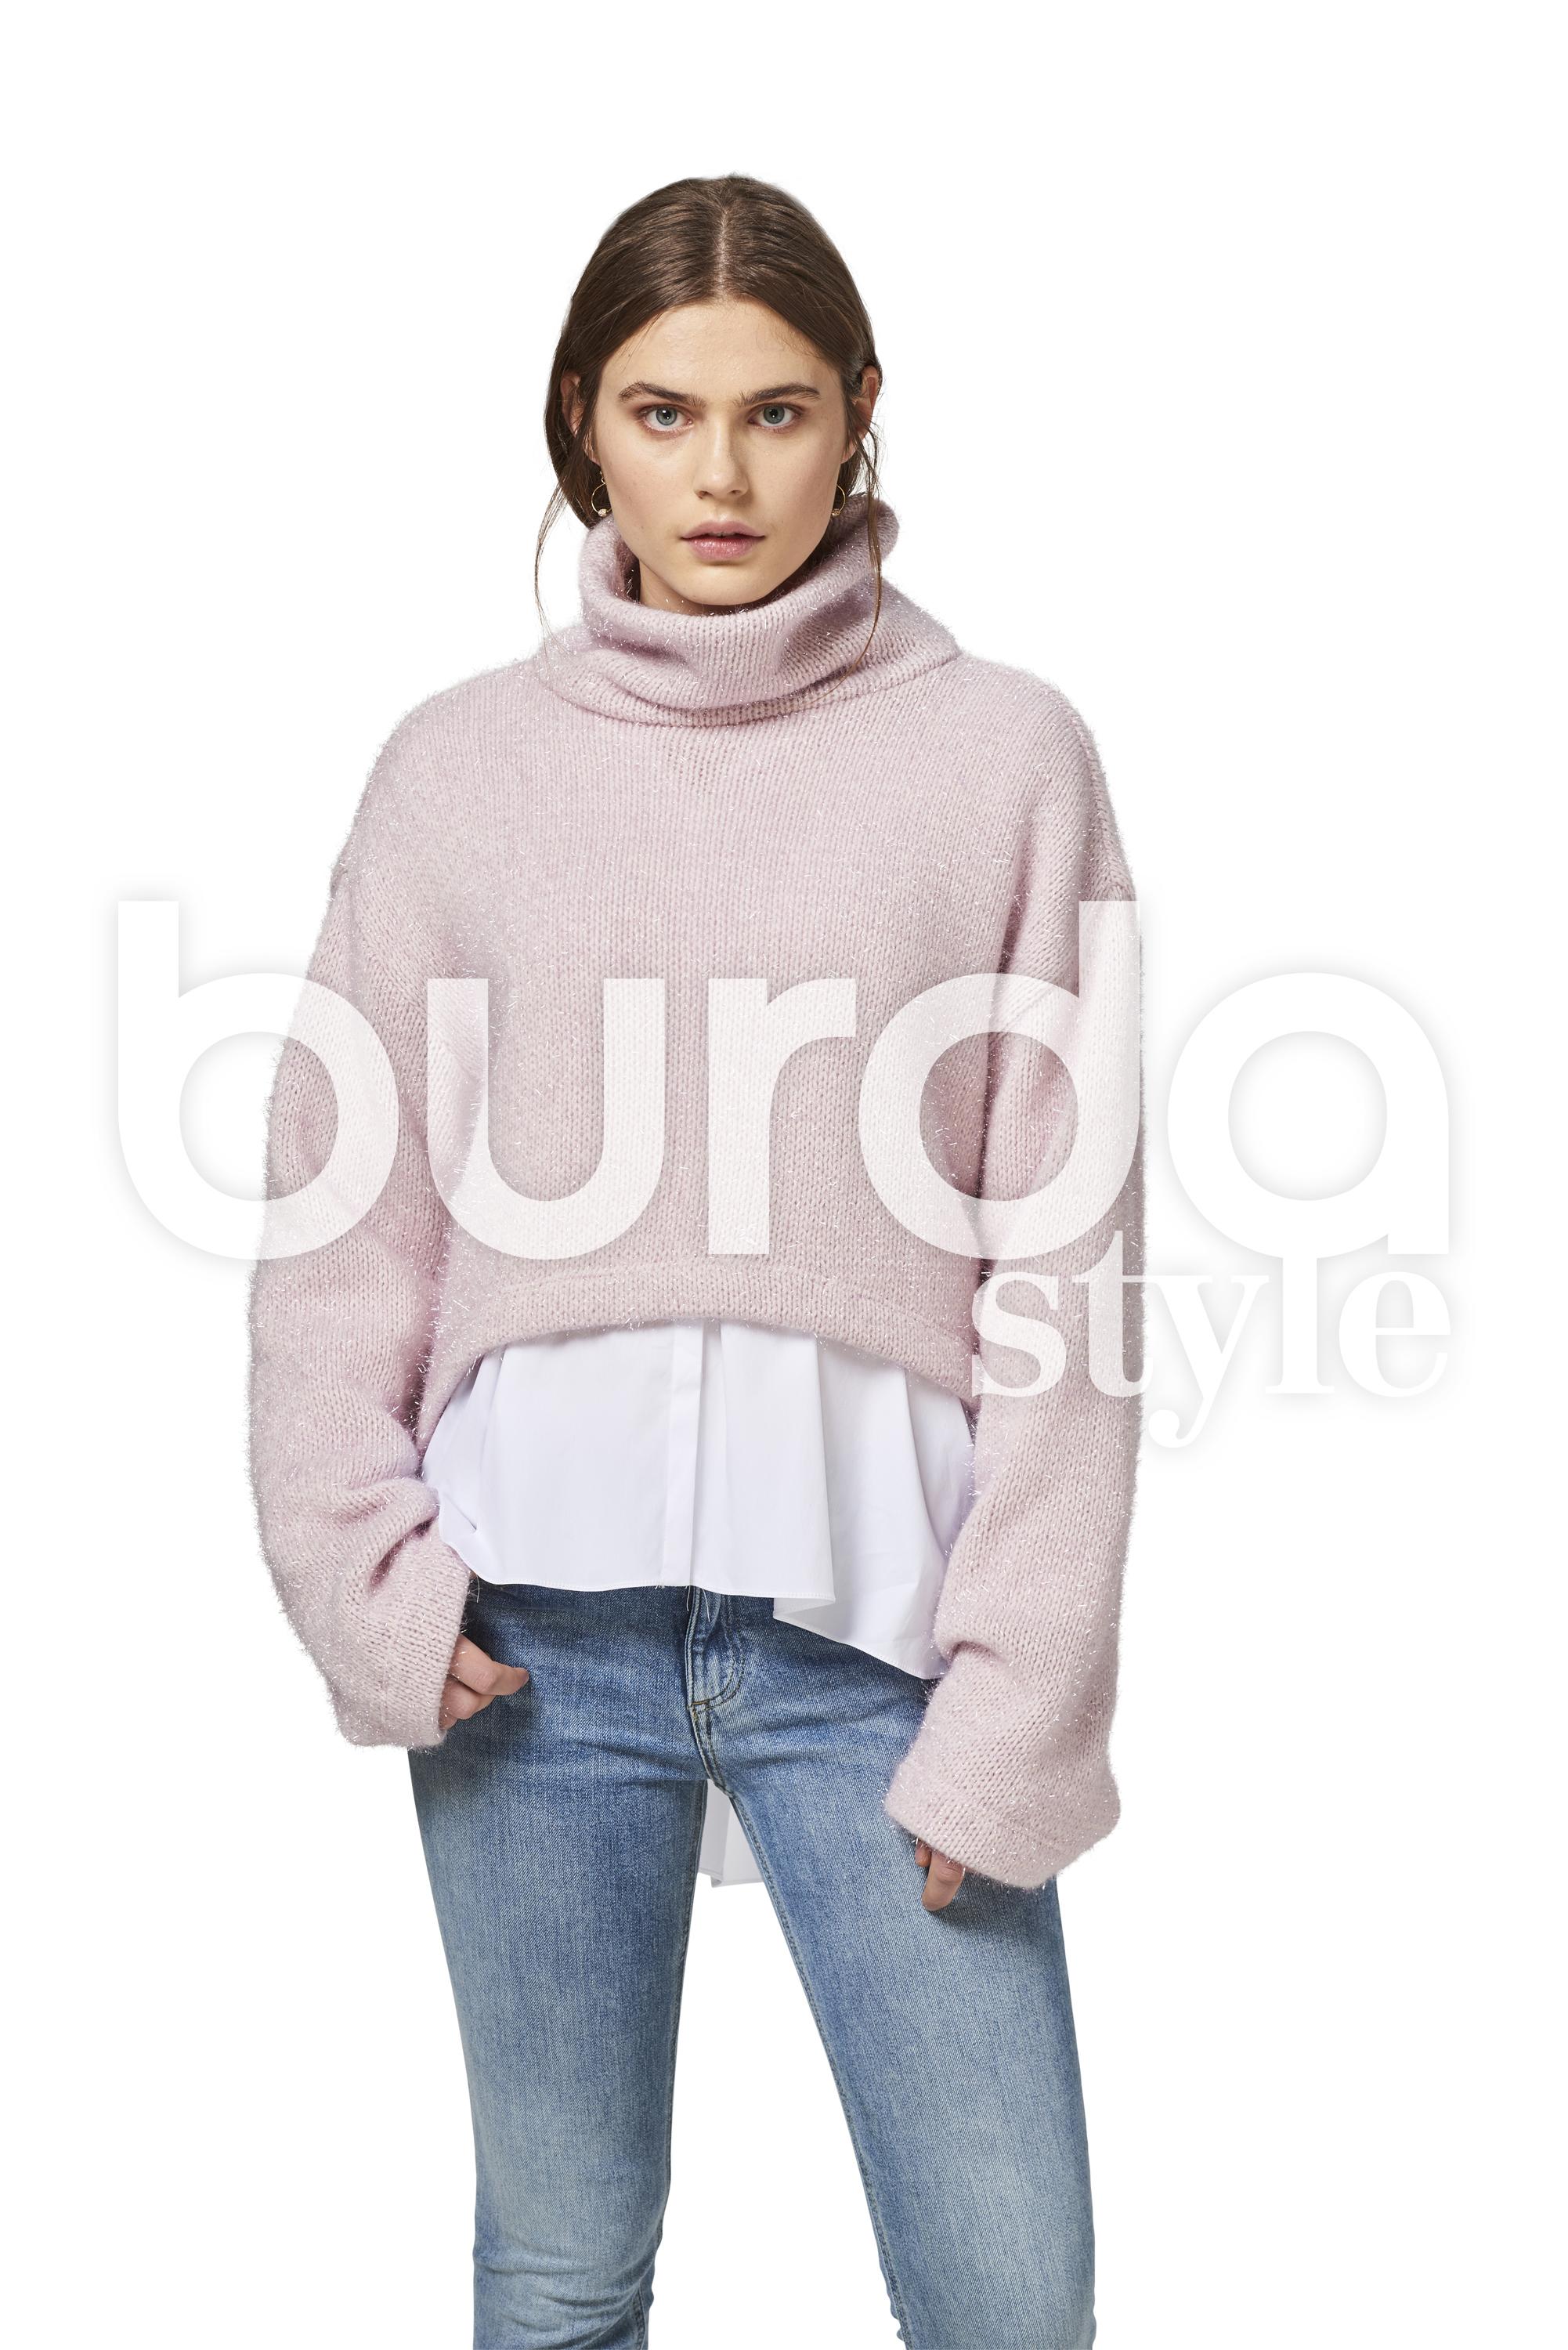 Burda B6476 Women's Pullover Collared Top